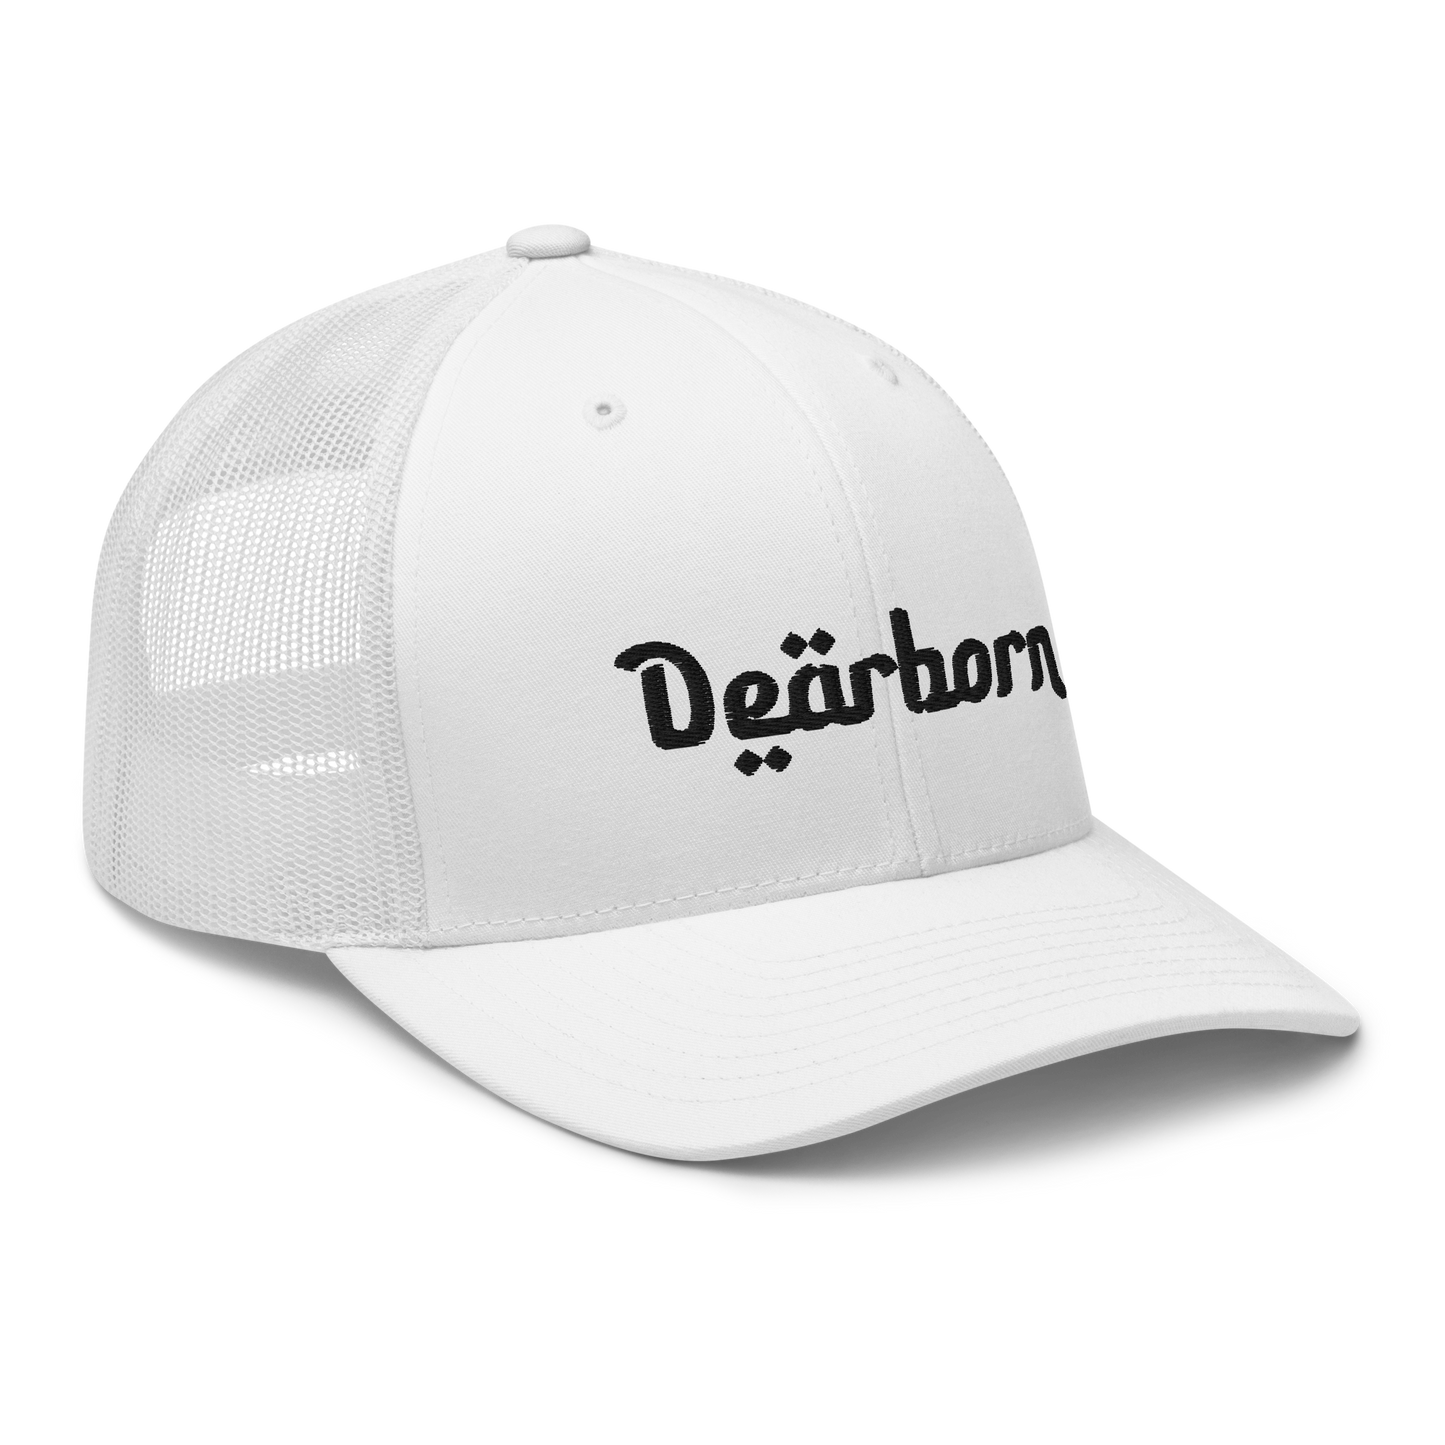 'Dearborn' Trucker Hat | White/Black Embroidery